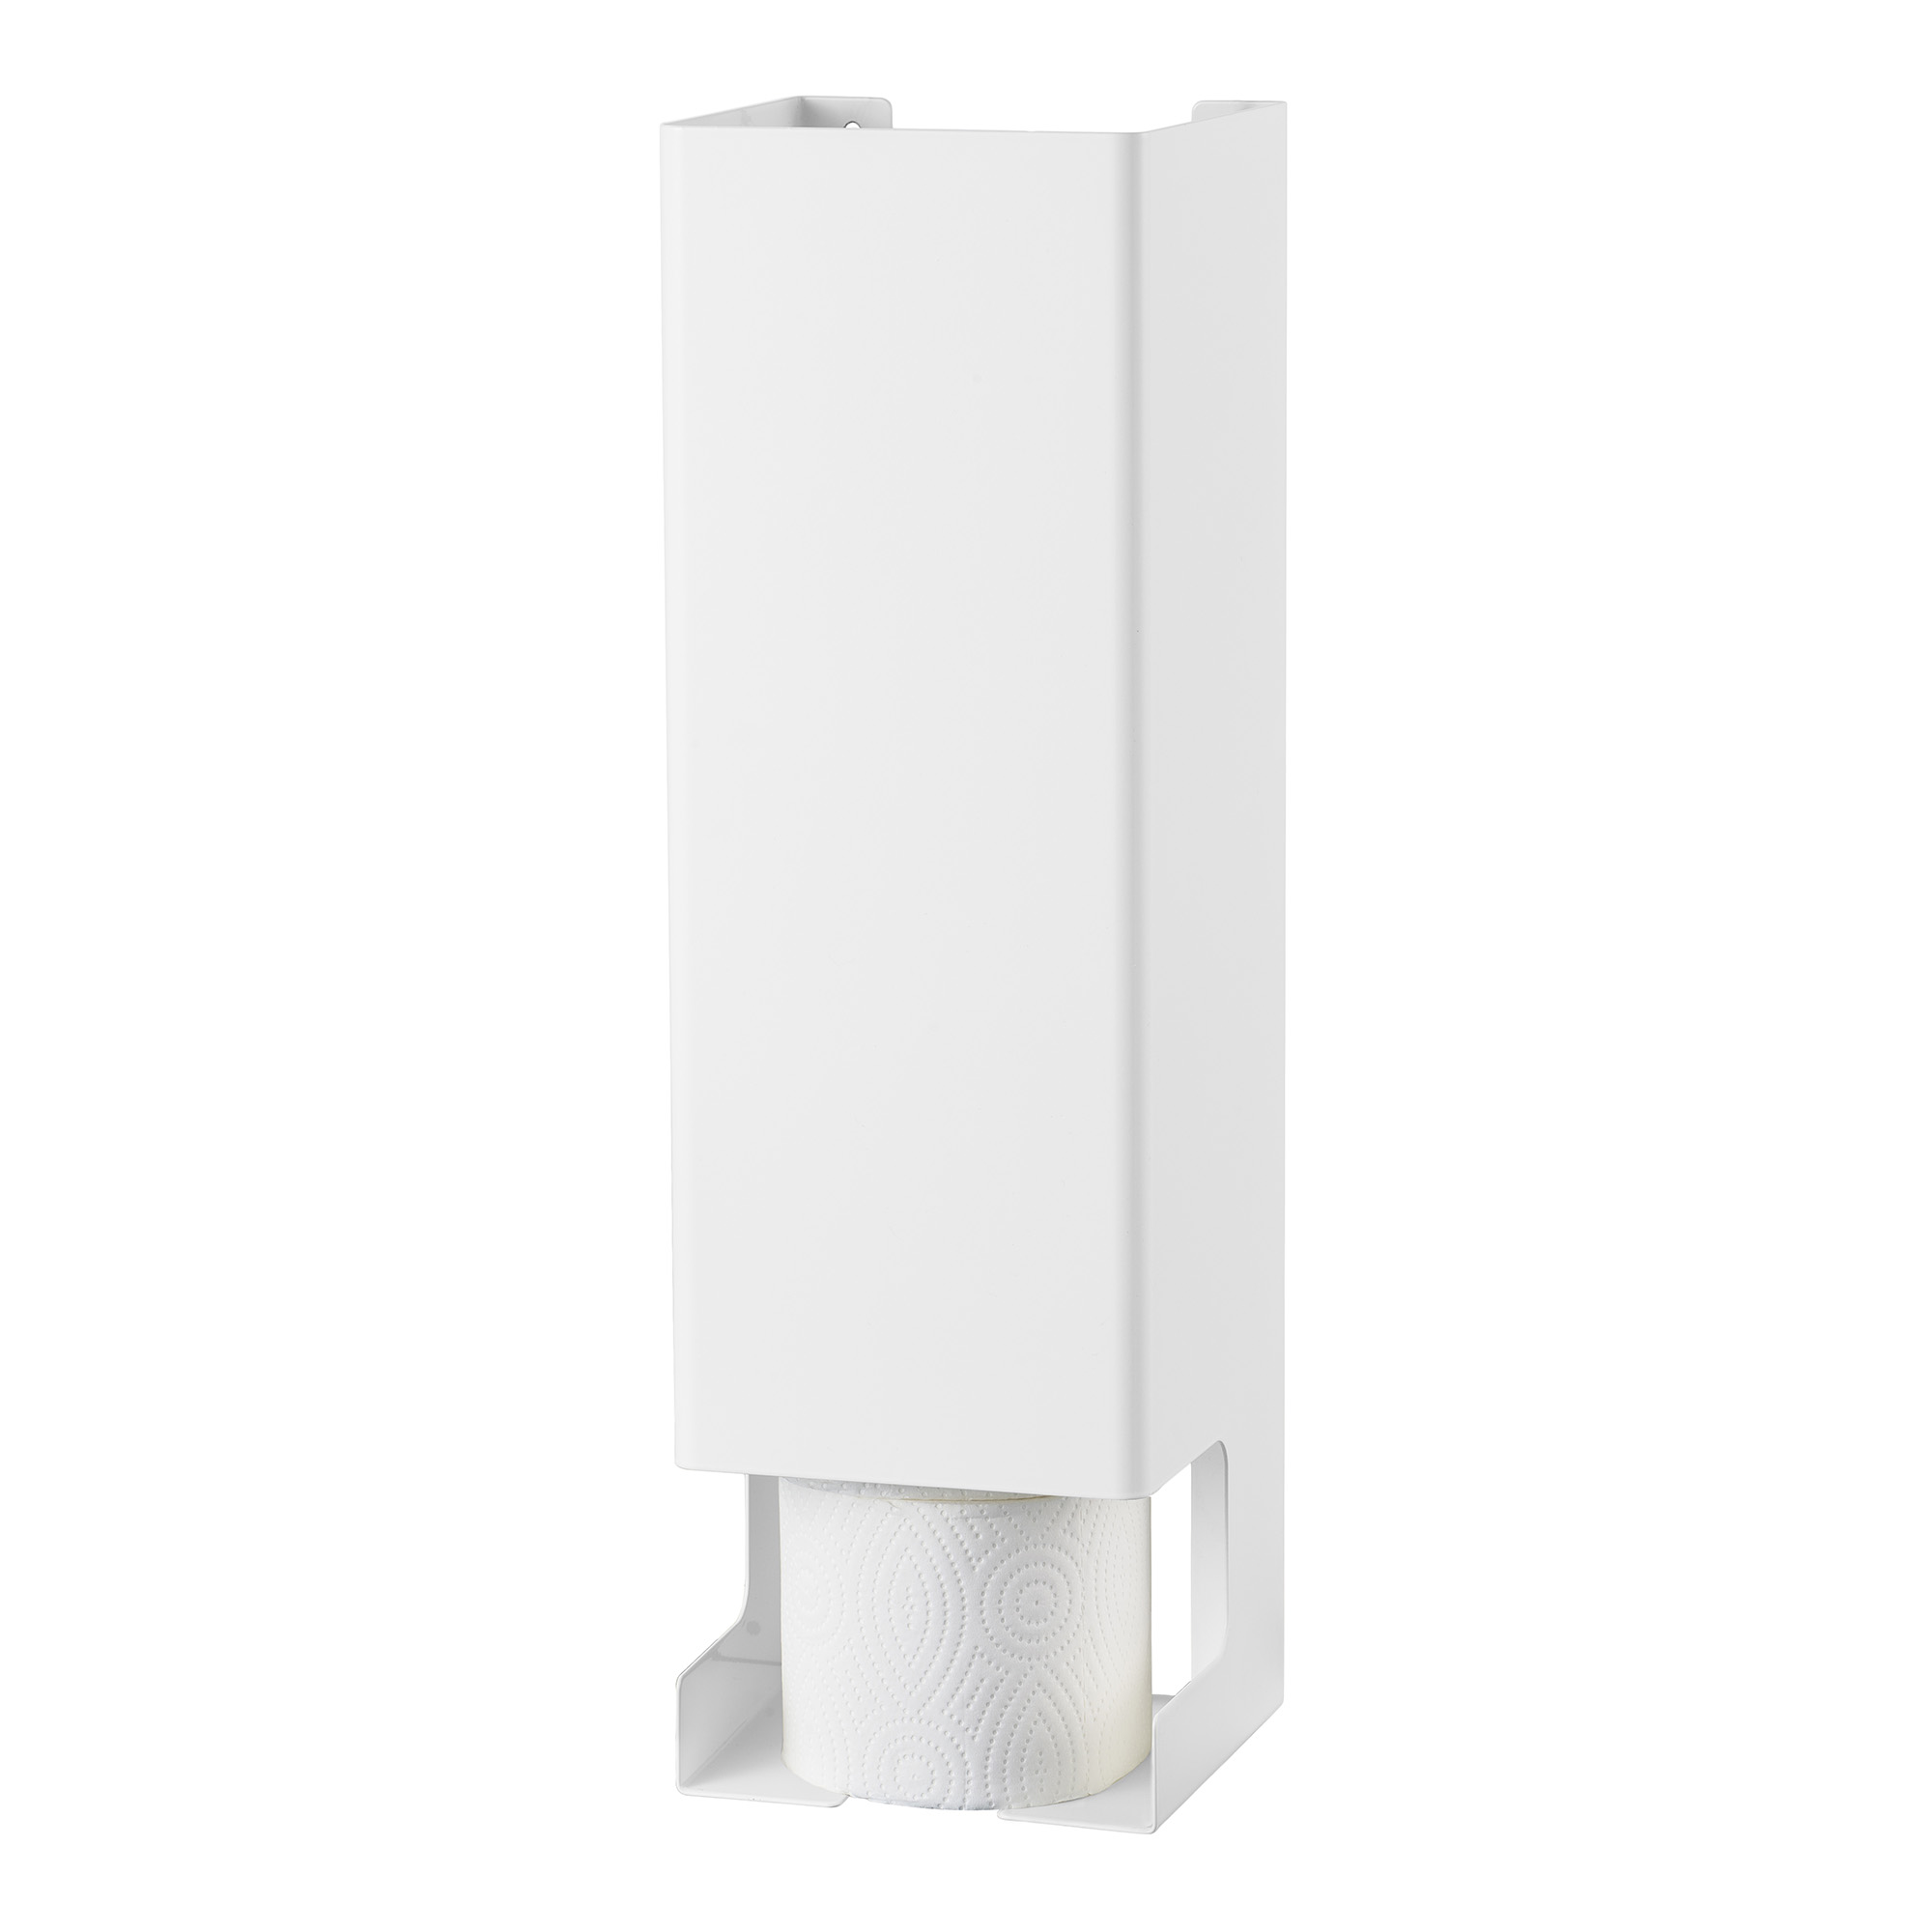 MediQo-line Toilettenpapier-Ersatzrollenhalter 5-fach RAC weiß 13179_1